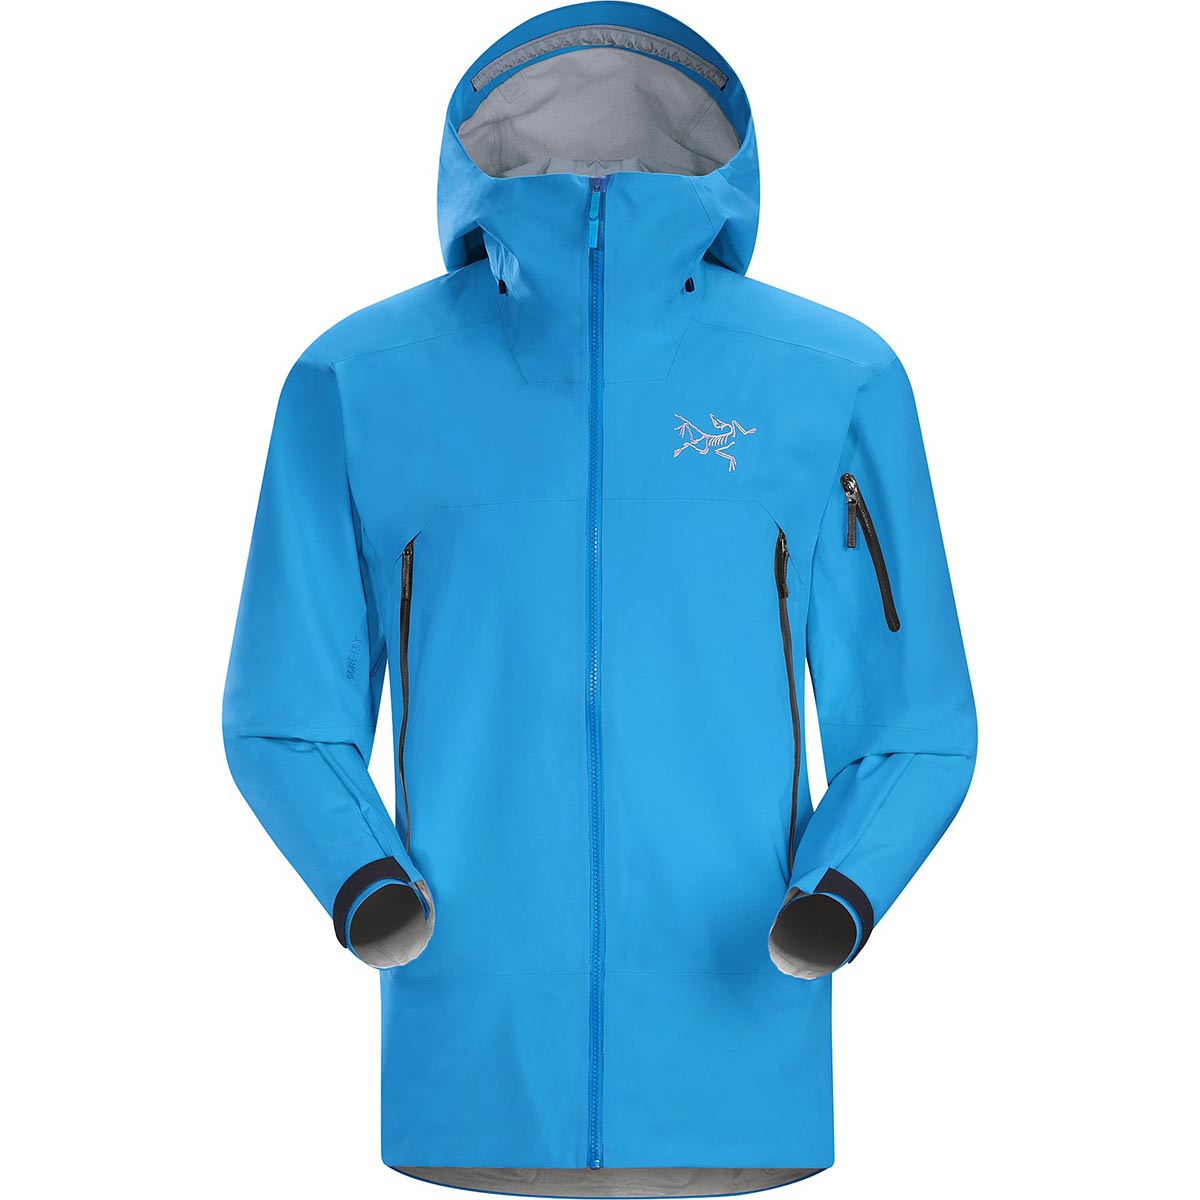 Arc'teryx Sabre Jacket, men's, Fall 2014-2015 colors of discontinued ...